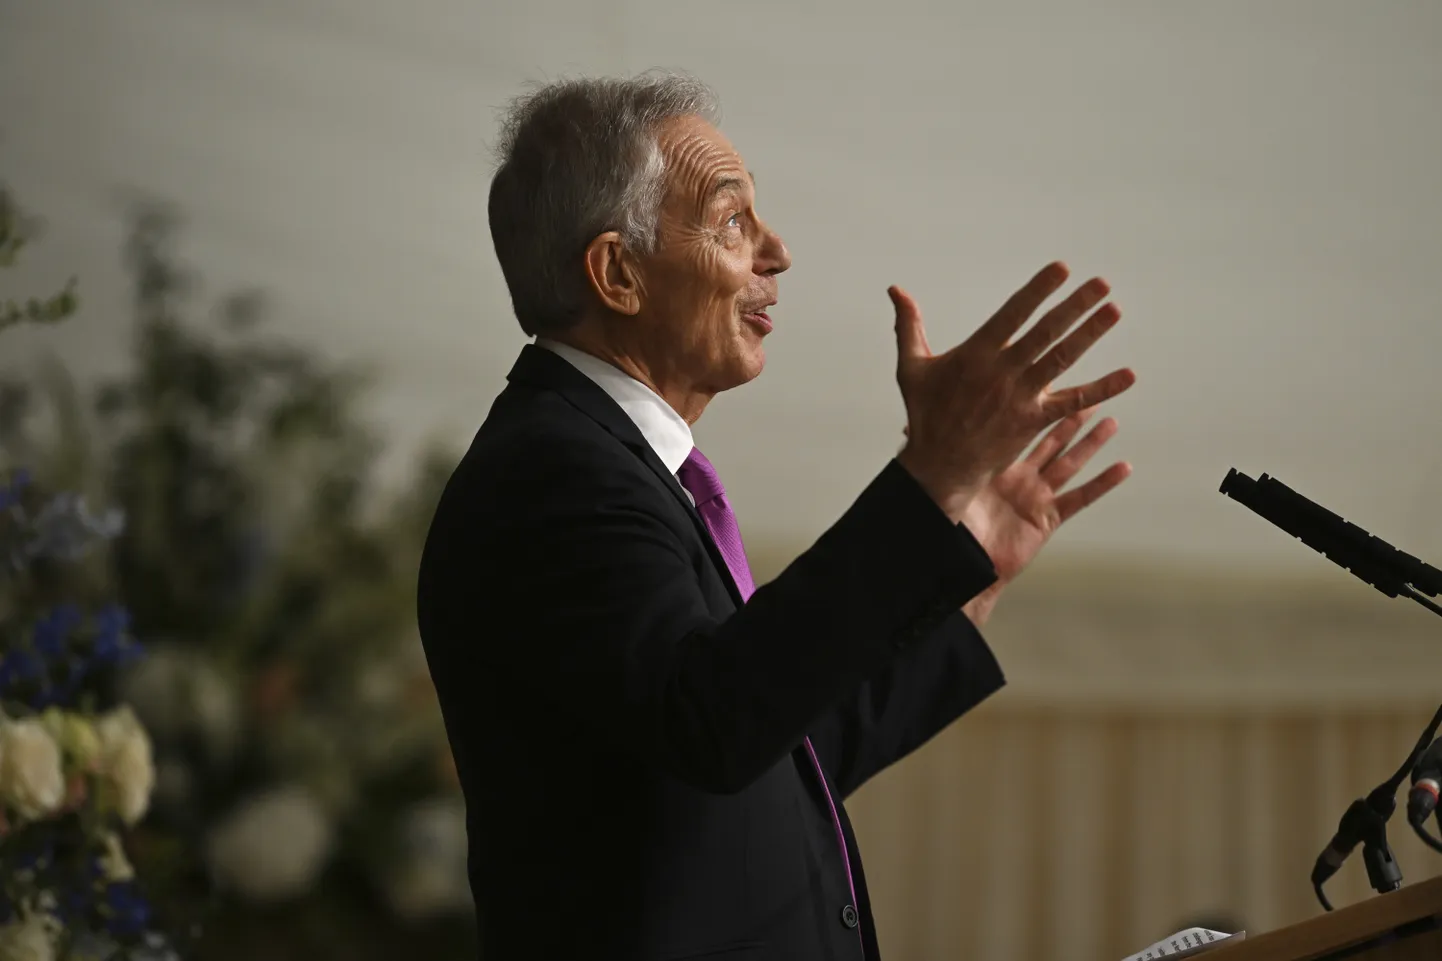 Briti ekspeaminister Tony Blair